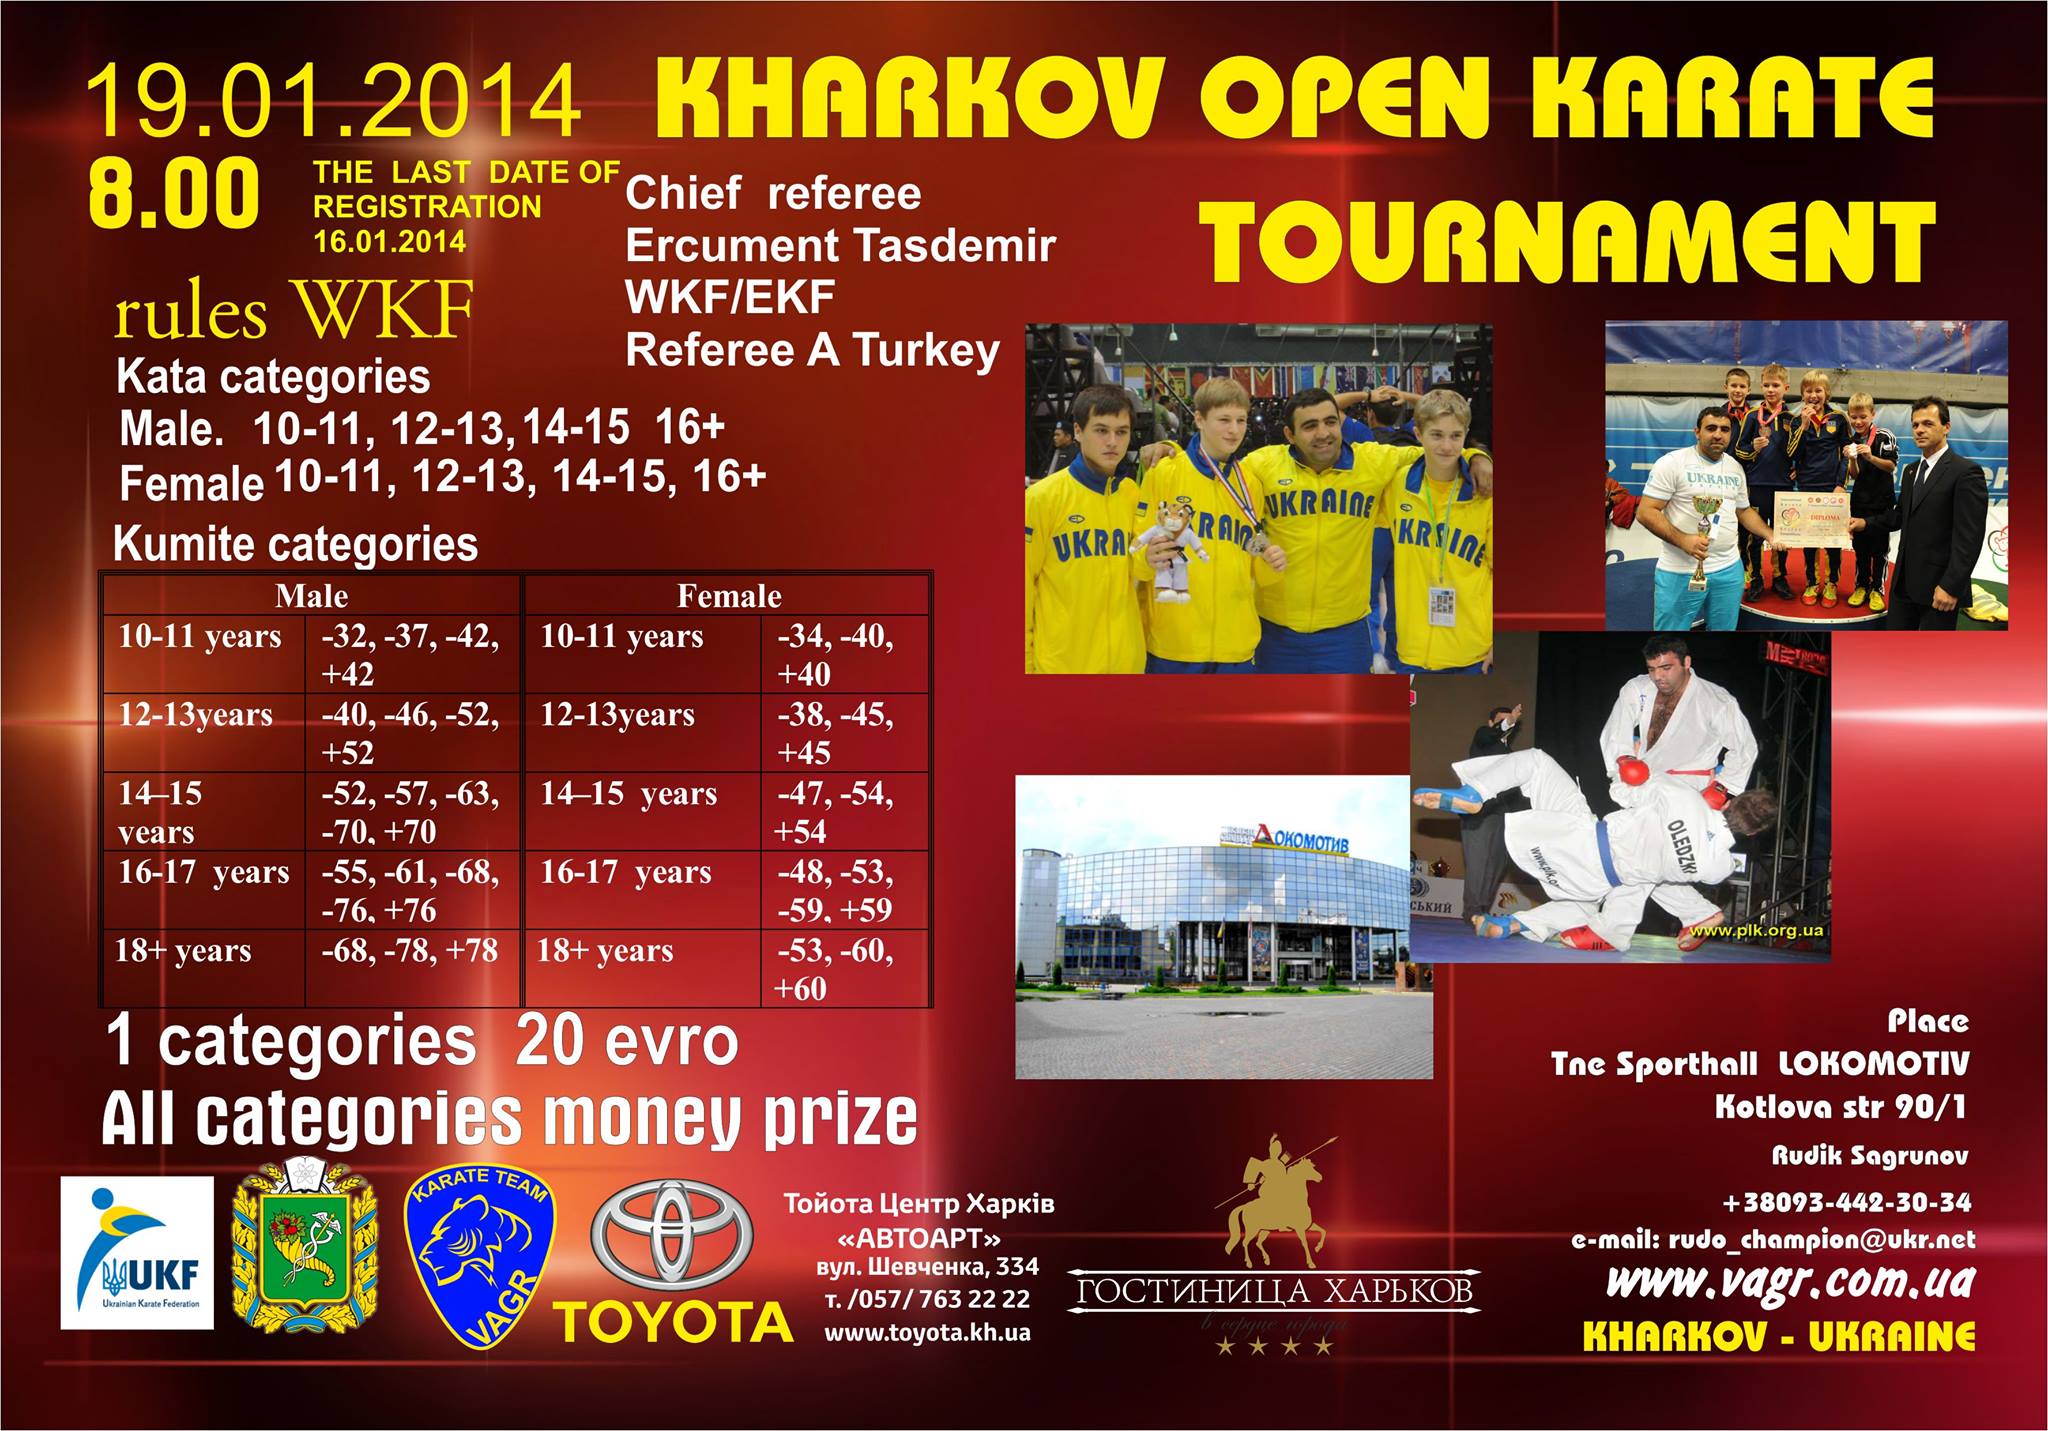 KHARKOV OPEN KARATE TOURNAMENT 2014